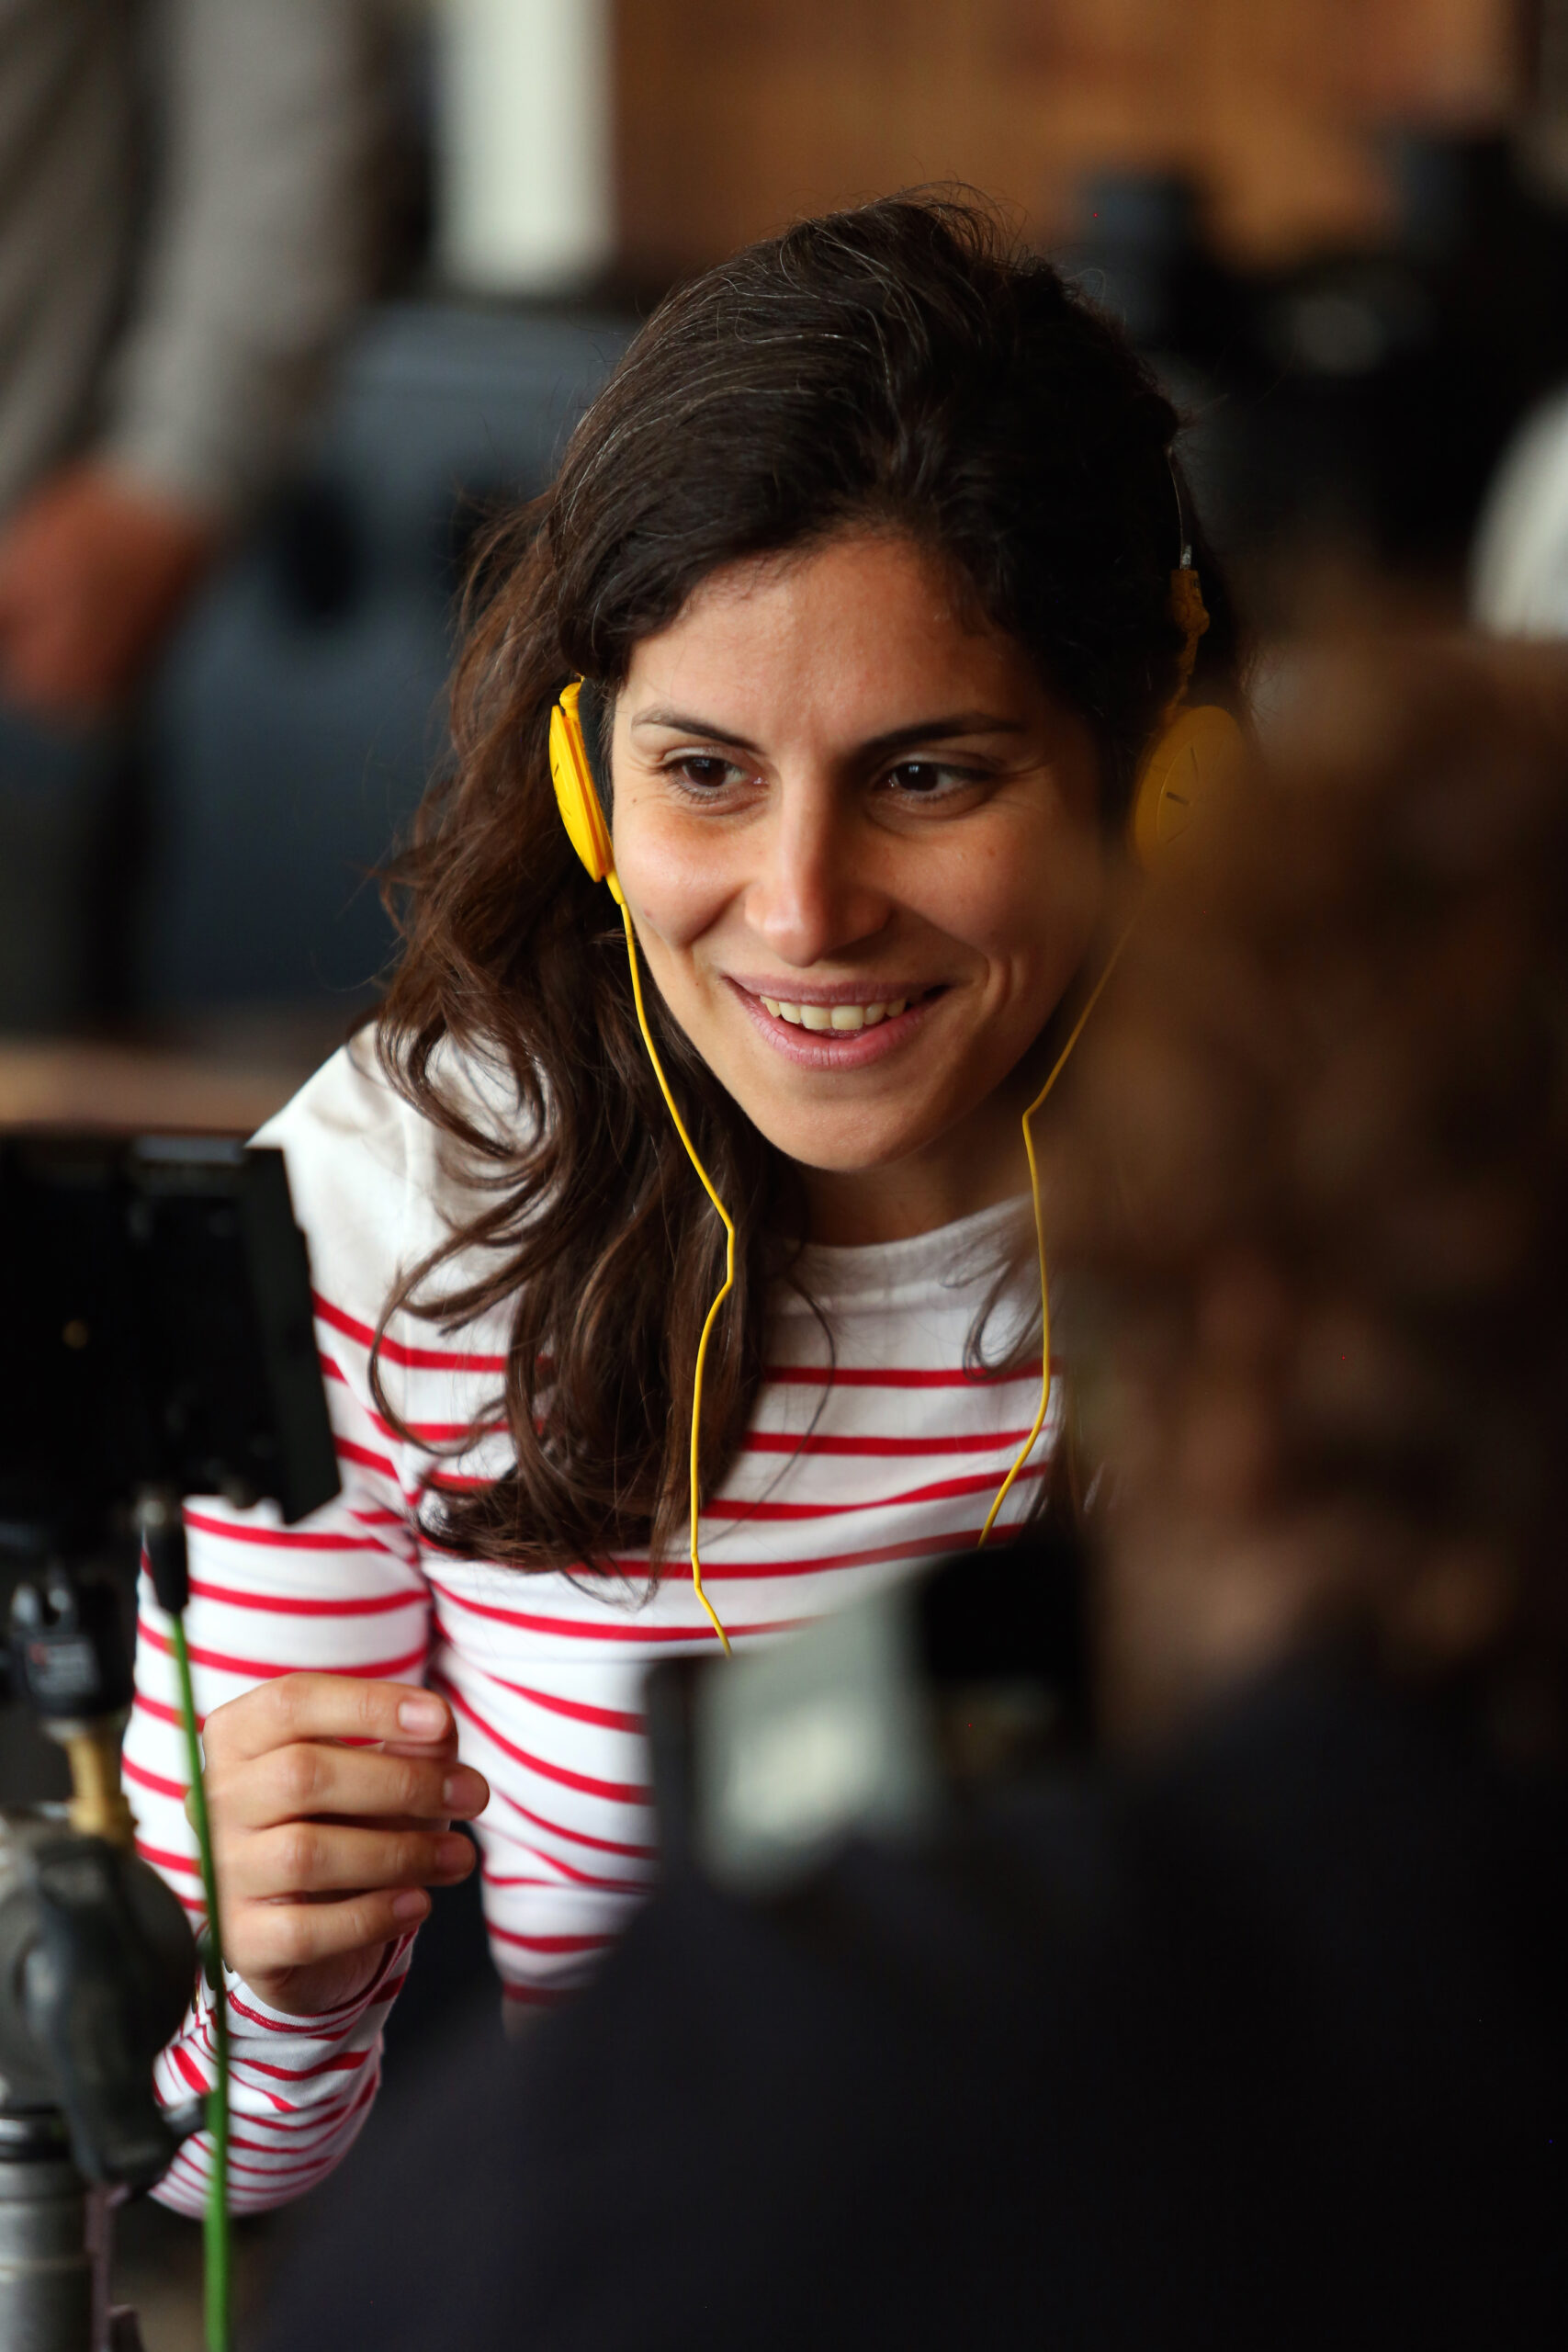 Sarah Hatem réalisatrice franco-libanaise<br />
French-Lebanese director